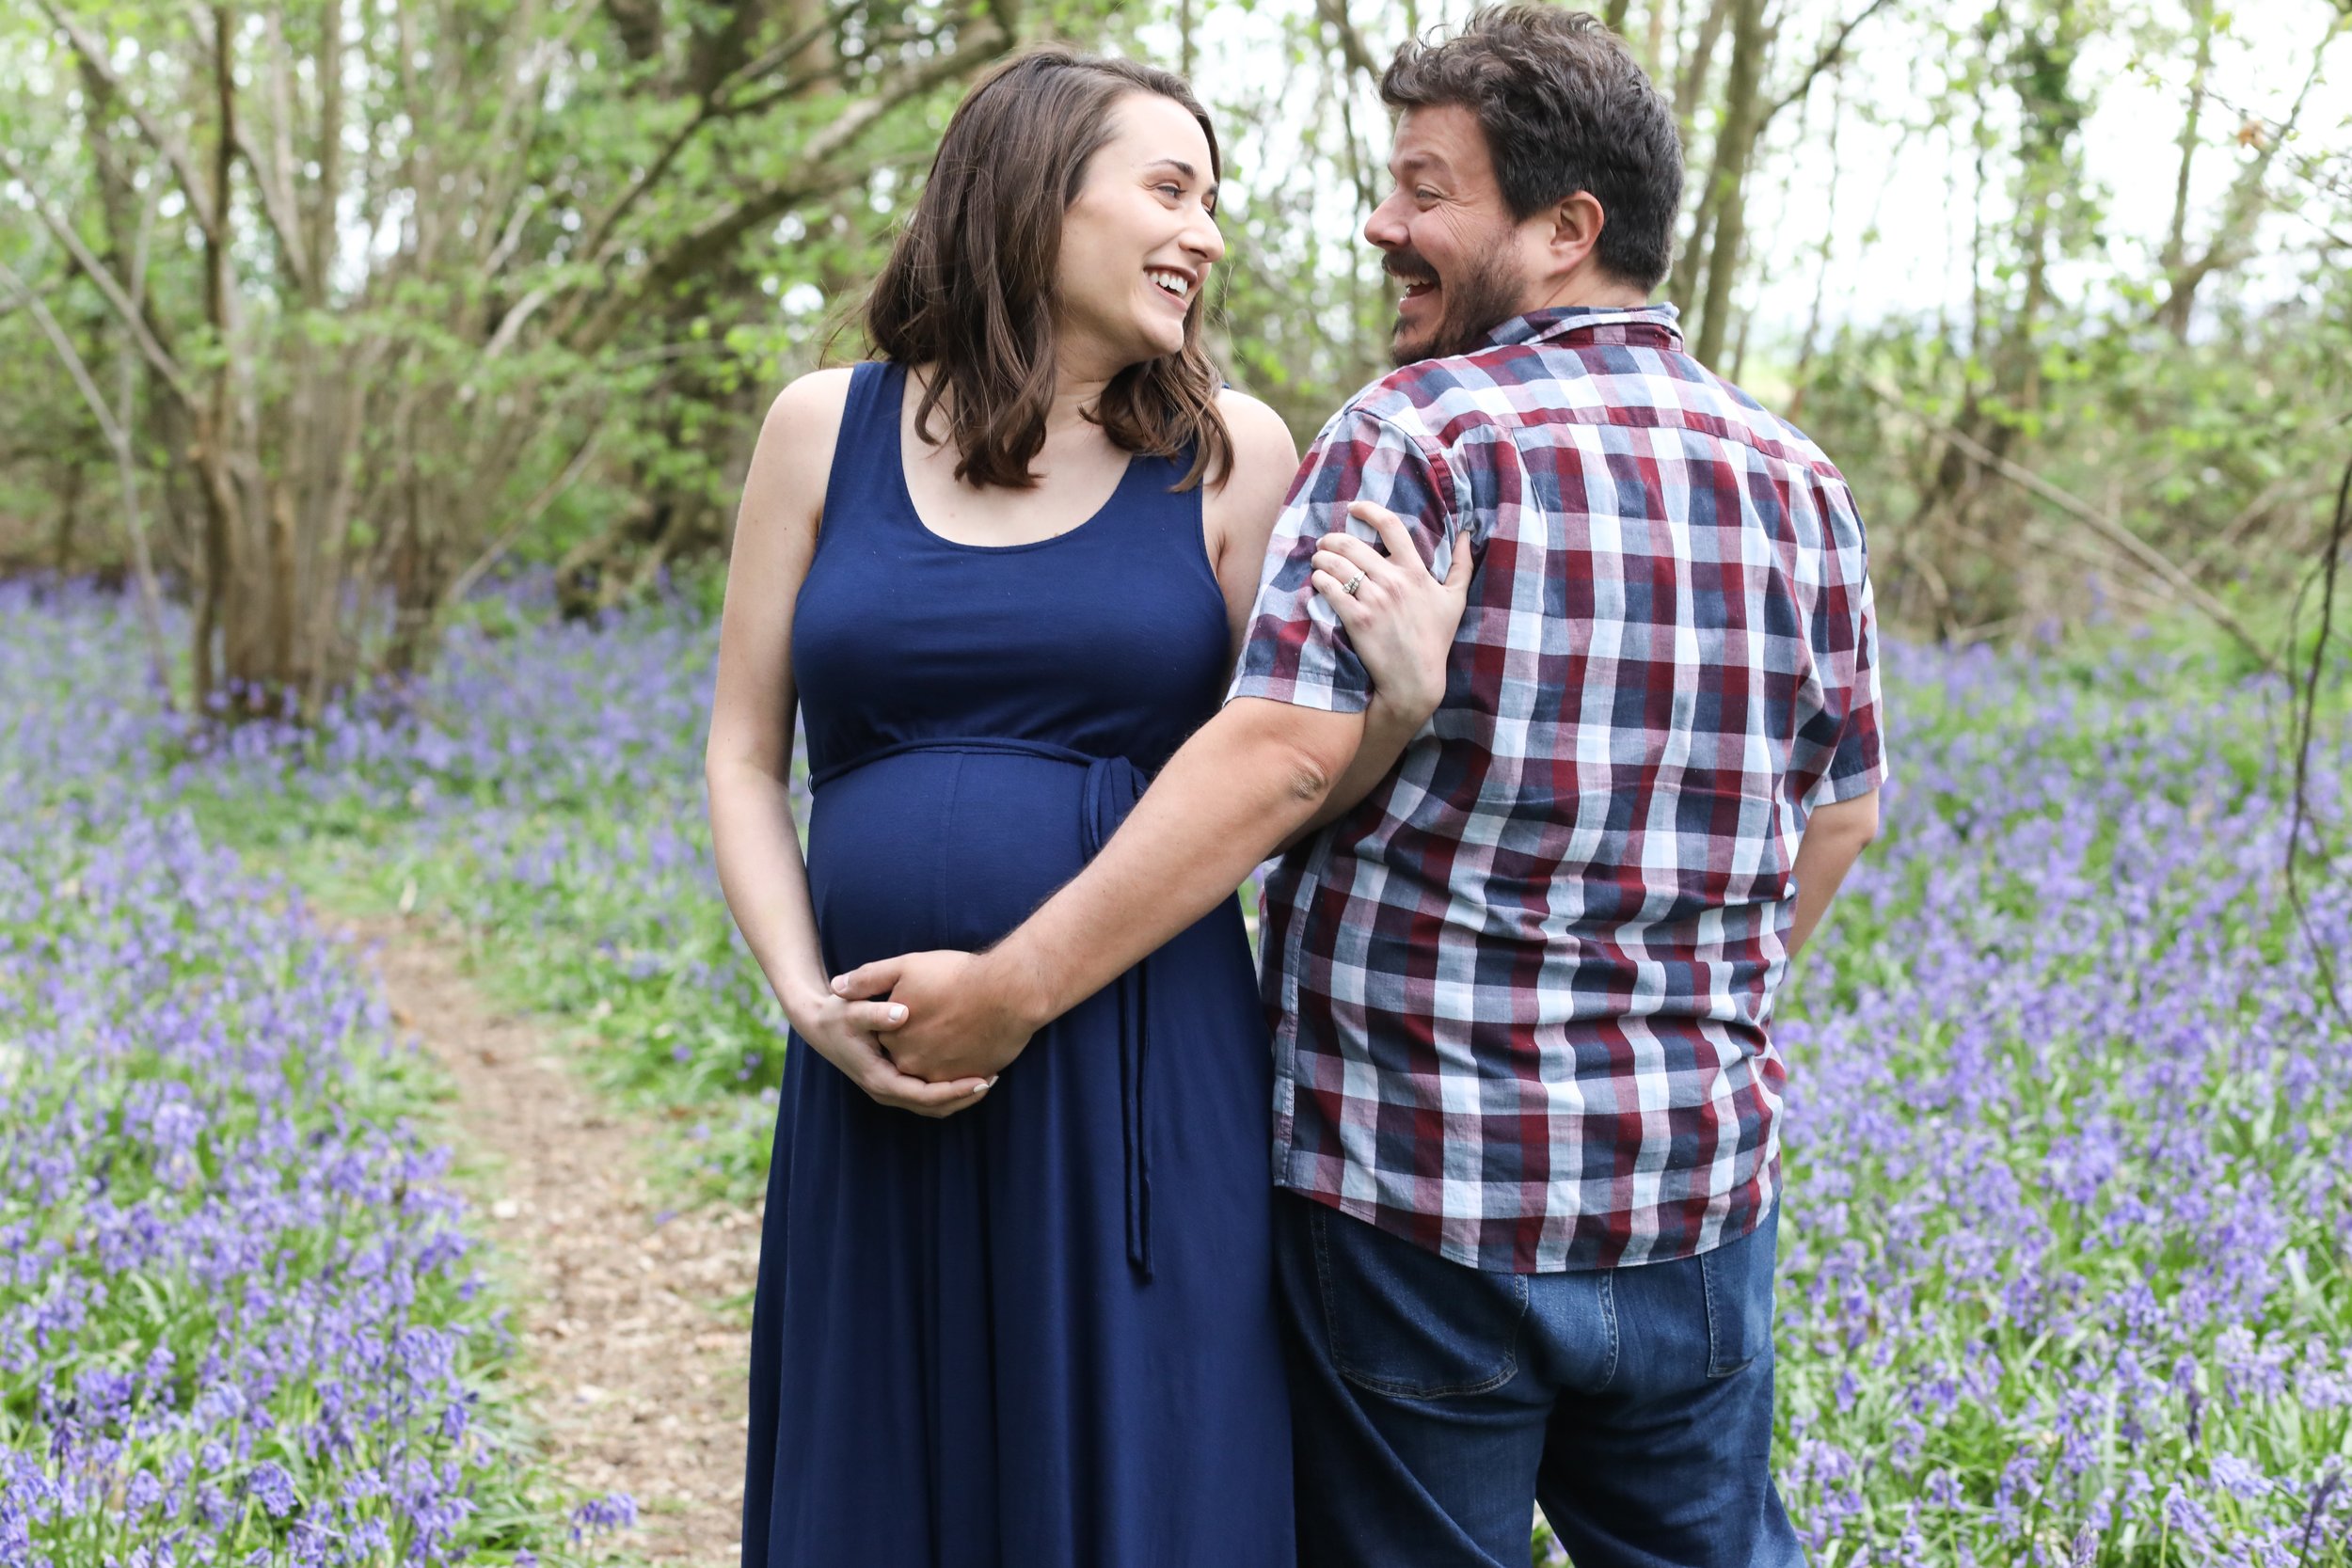 Maternity photo shoot in Berkshire | Bluebell pregnancy photos with Sarah & Bob104 choice .JPG